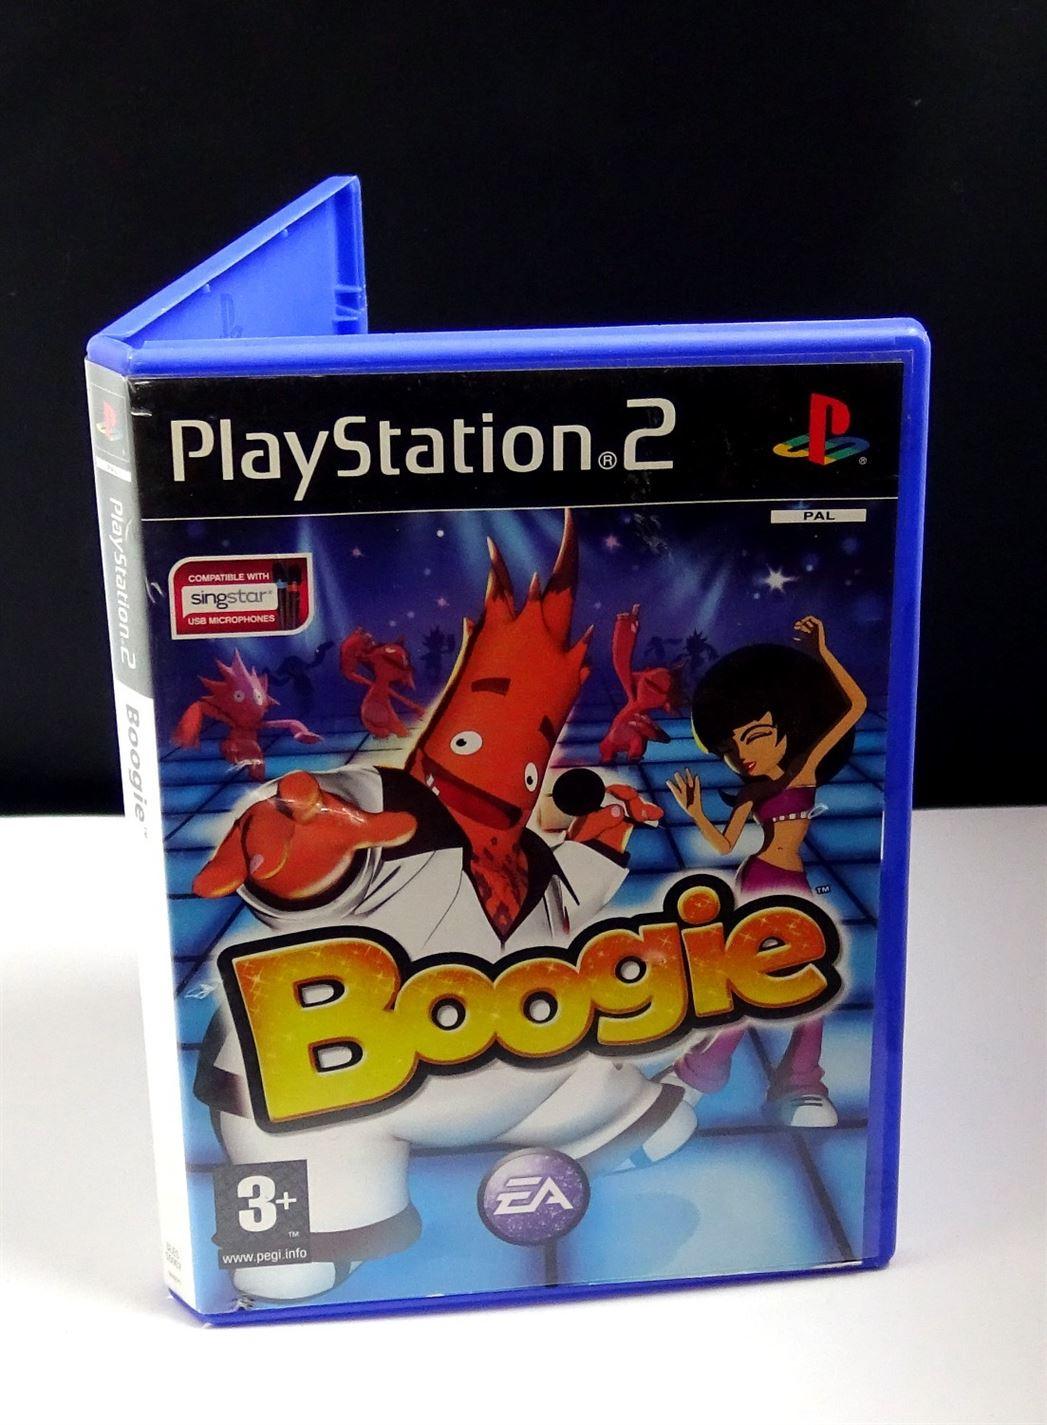 Boogie PS2 (Playstation 2) - UK Seller